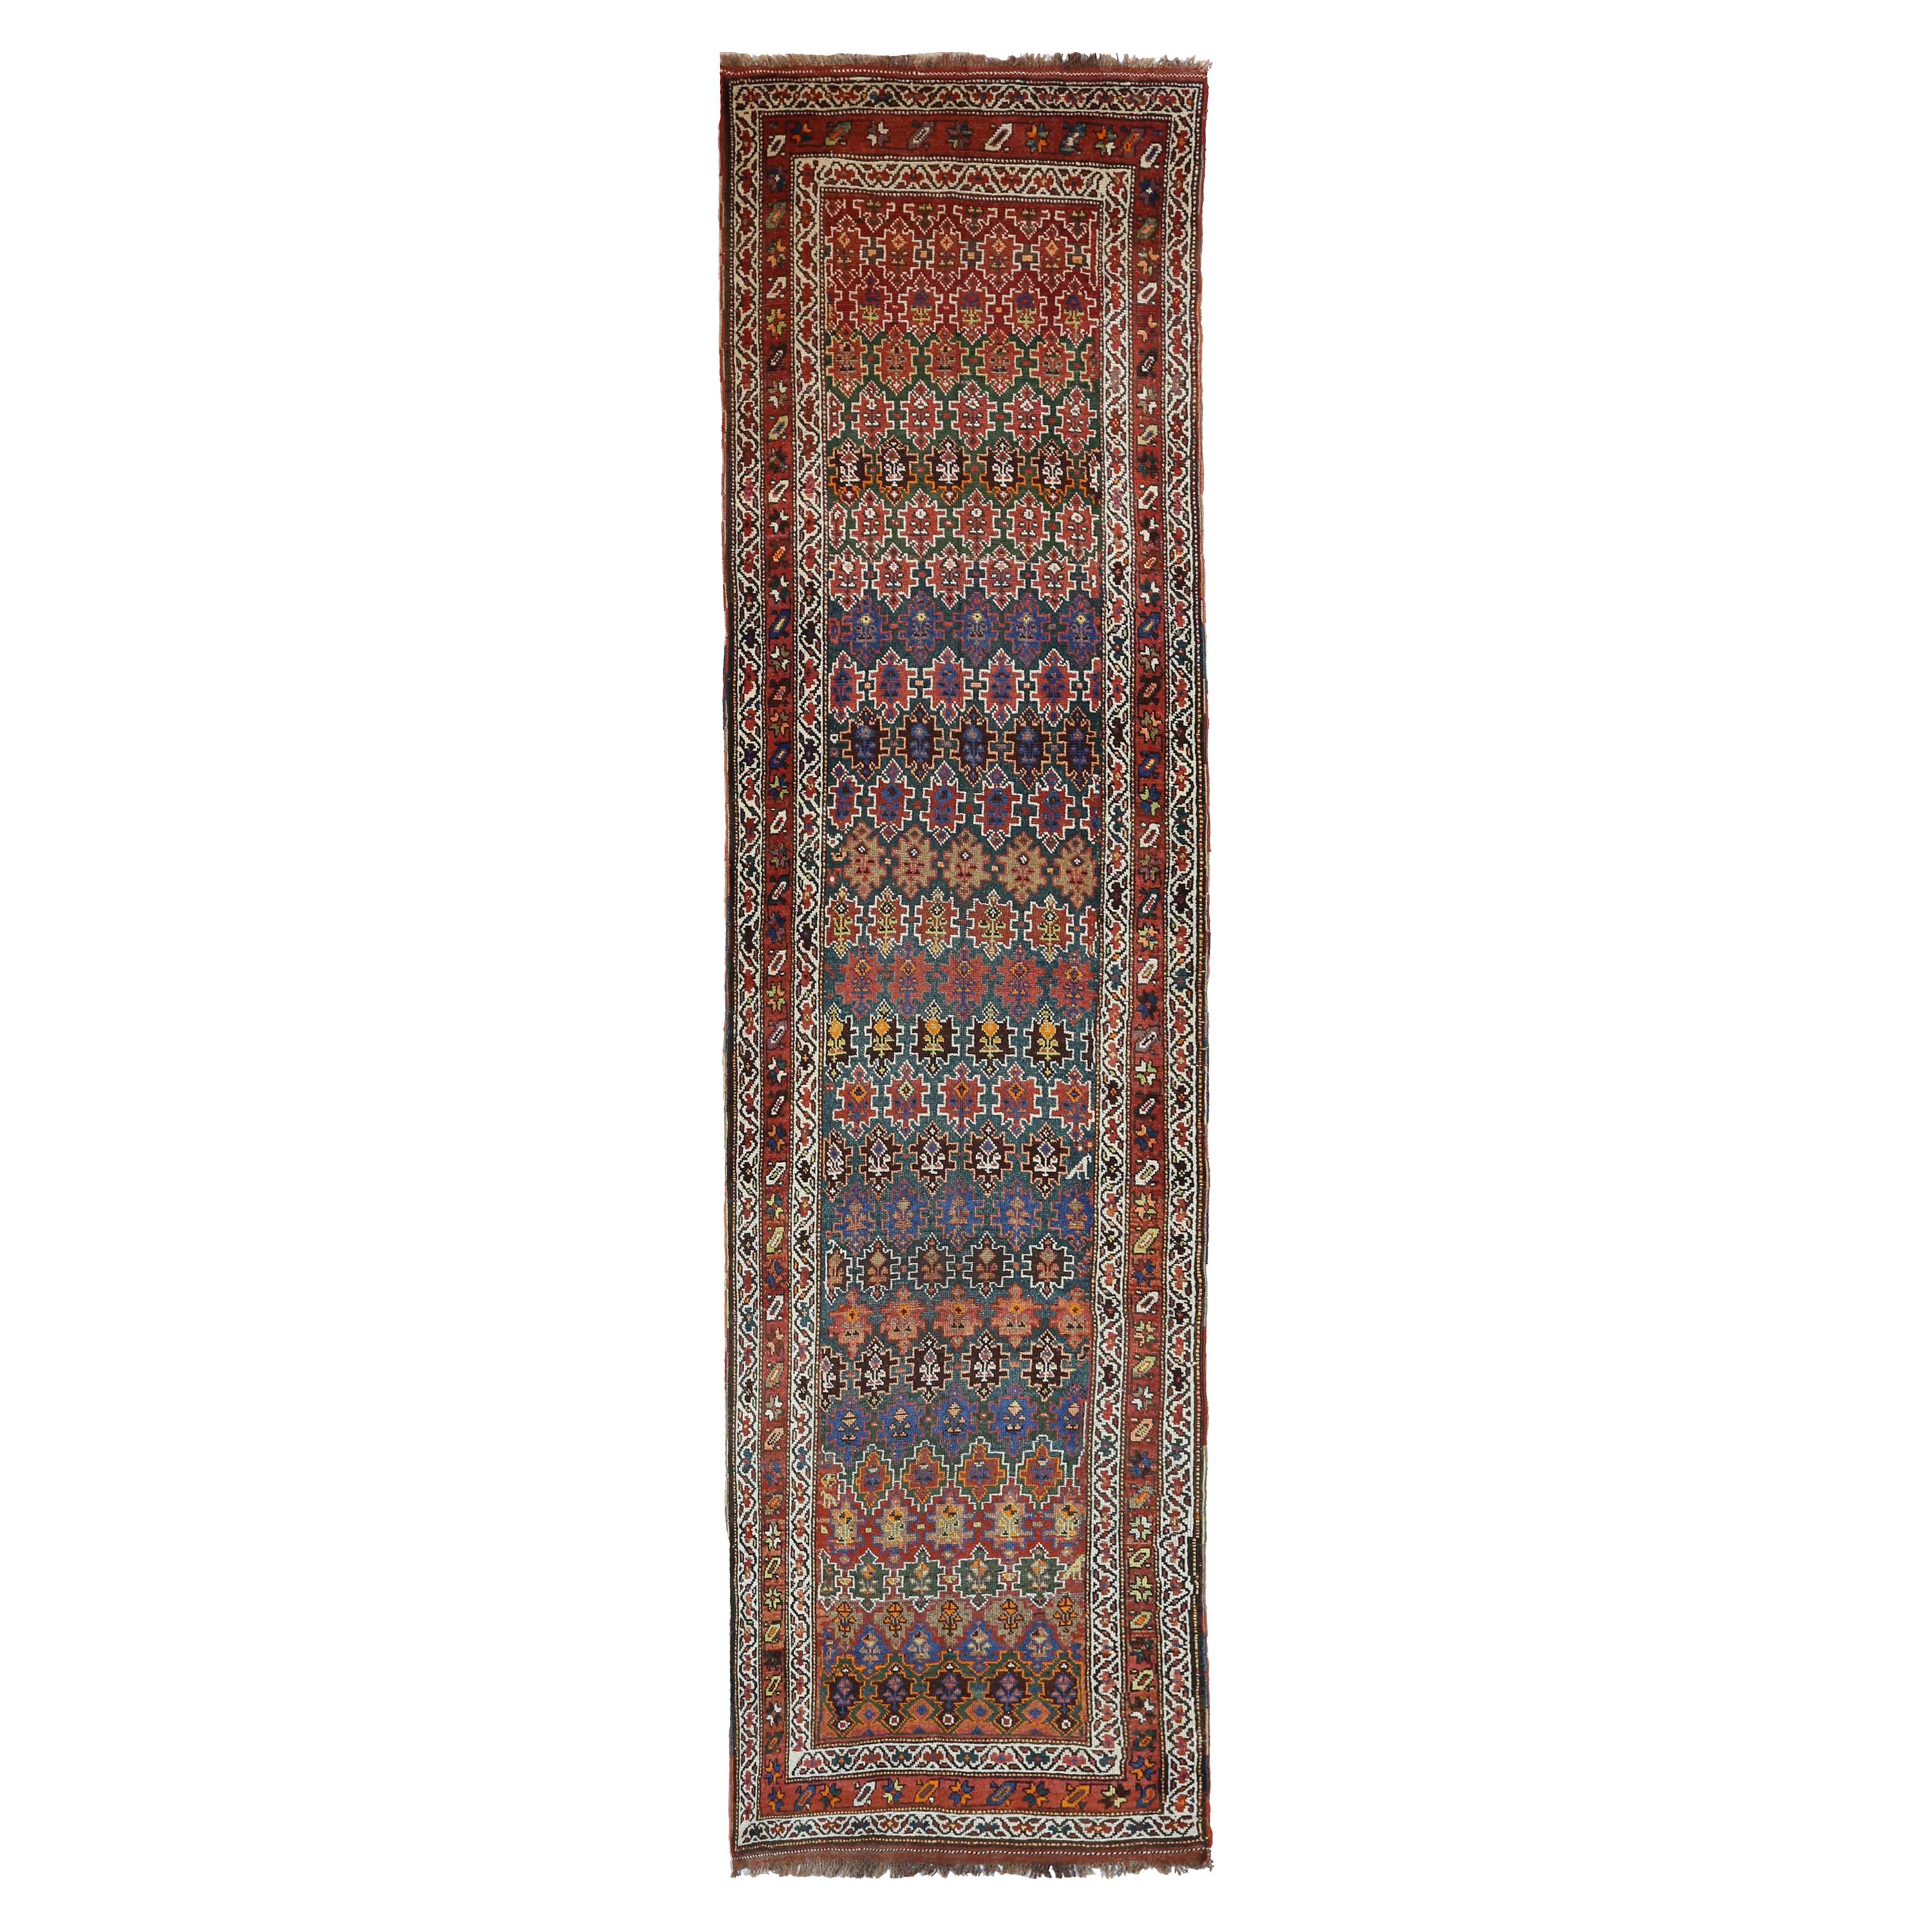 Antique Persian Rug Azerbaijan Design with Vibrant Tribal Patterns, circa 1920s